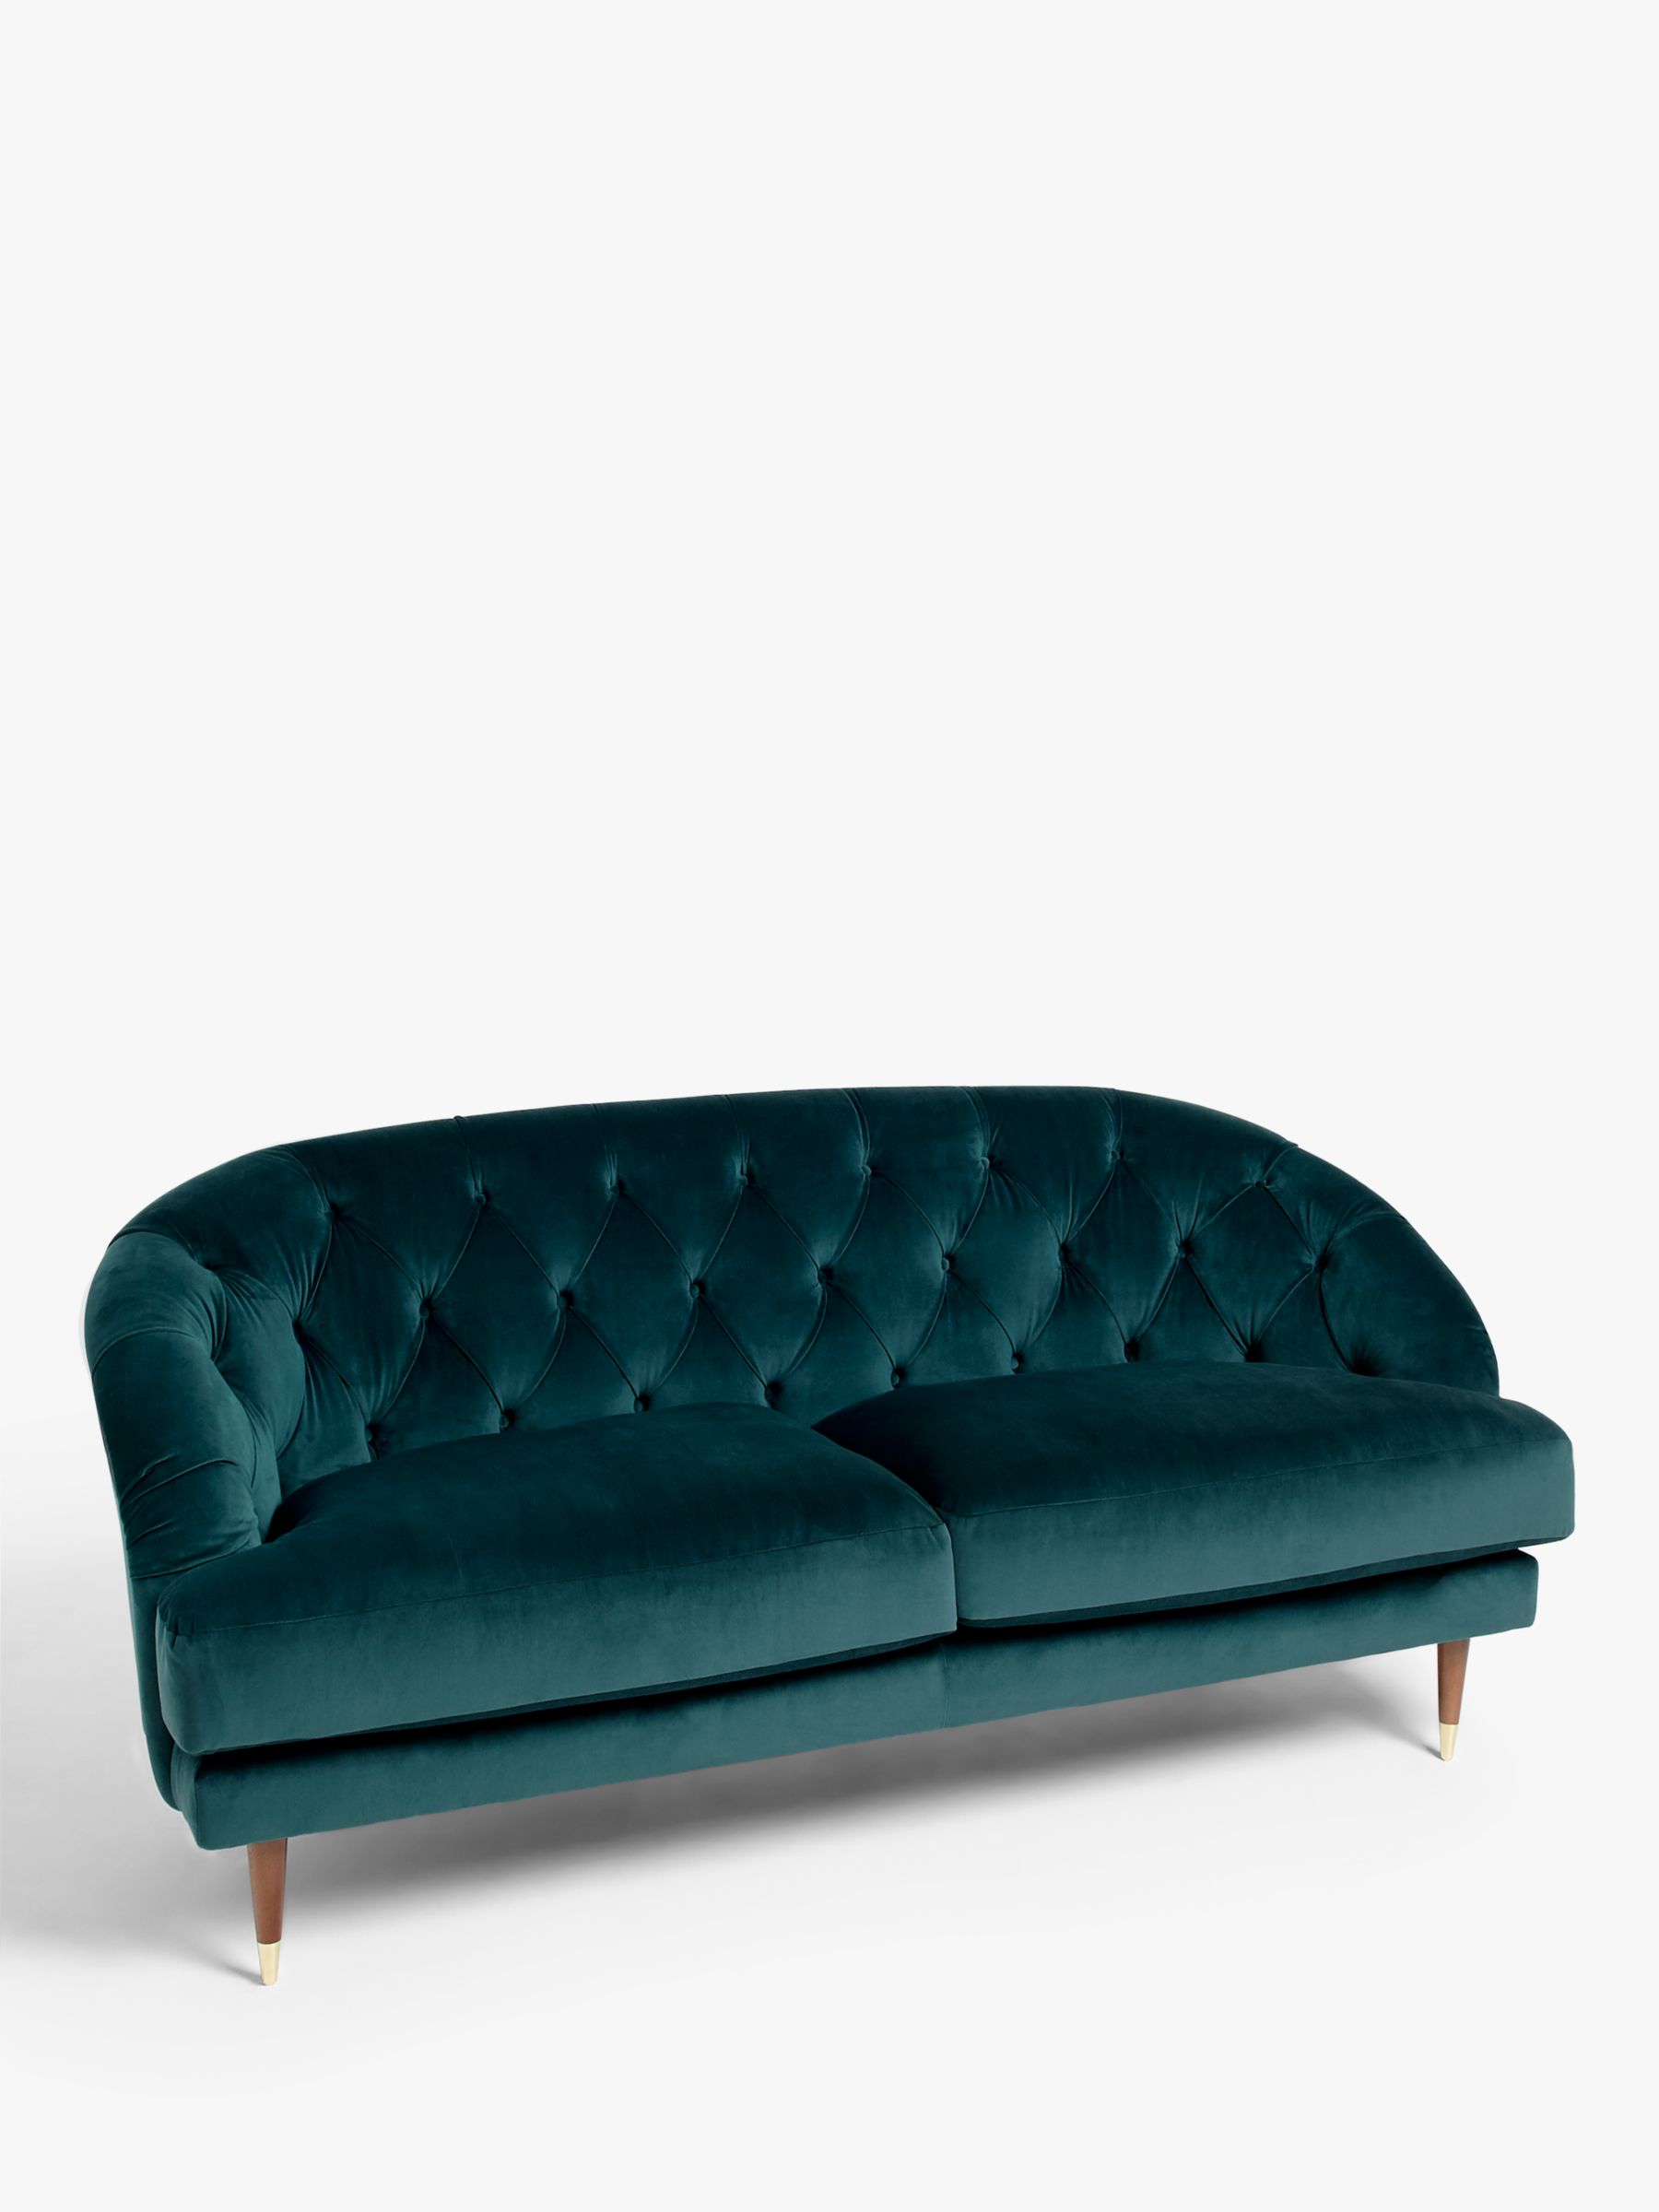 John Lewis & Partners + Swoon Radley Large 3 Seater Sofa